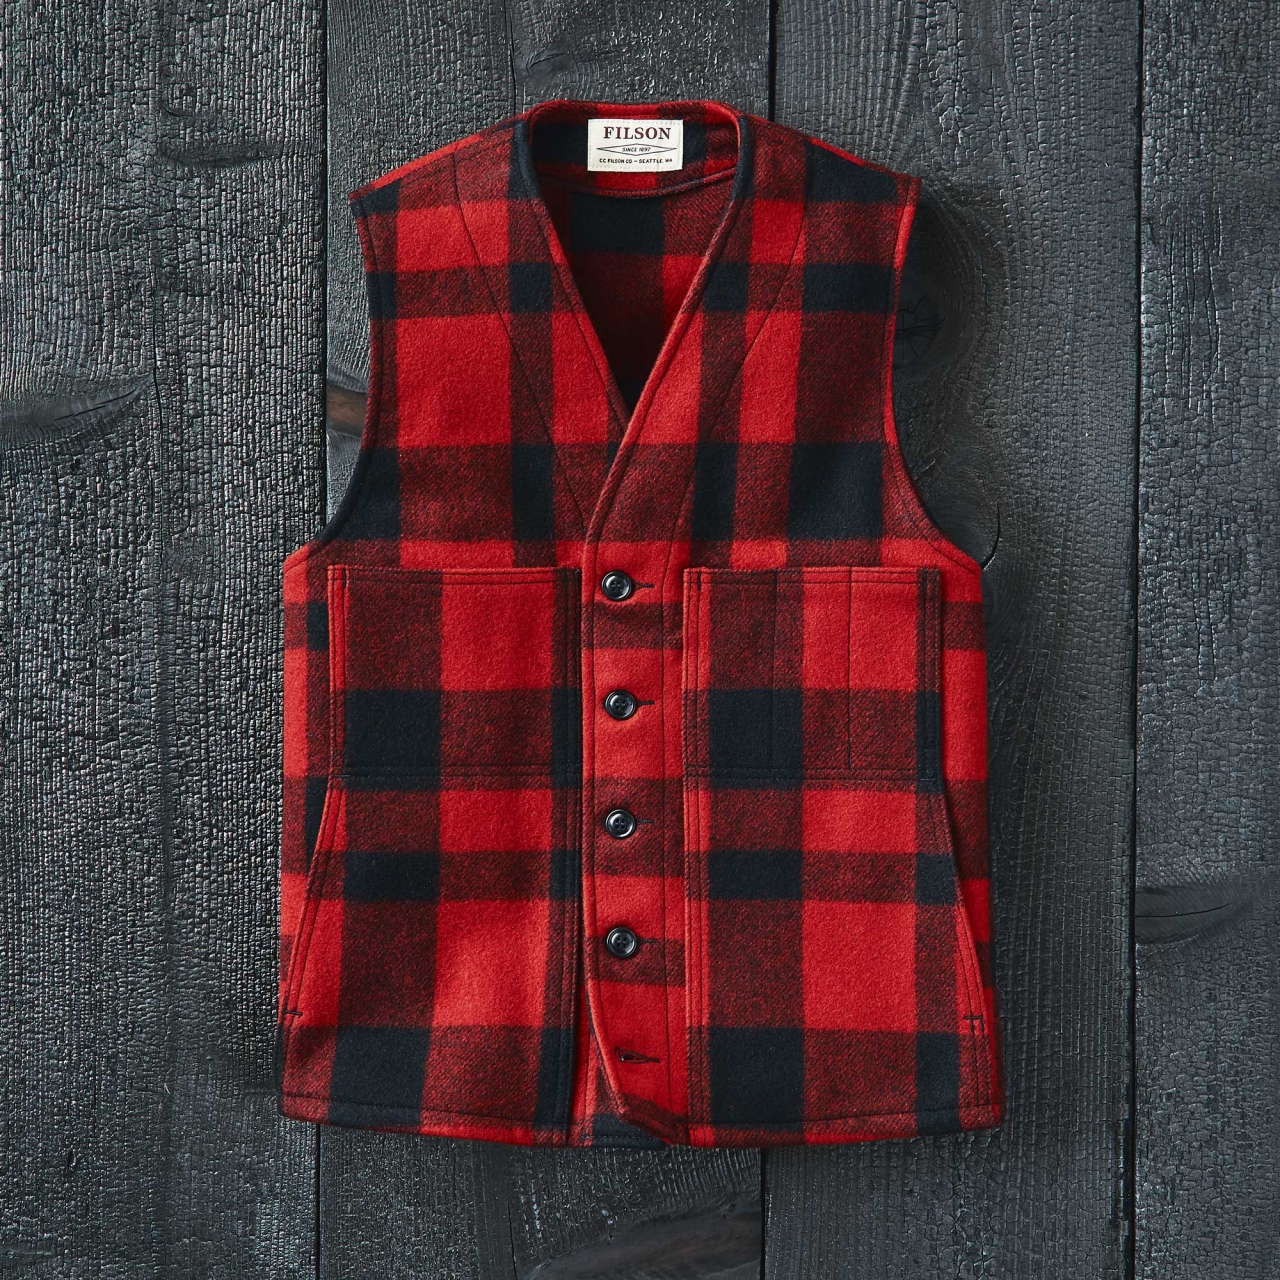 Filson Mackinaw Wool Vest - Red/Black